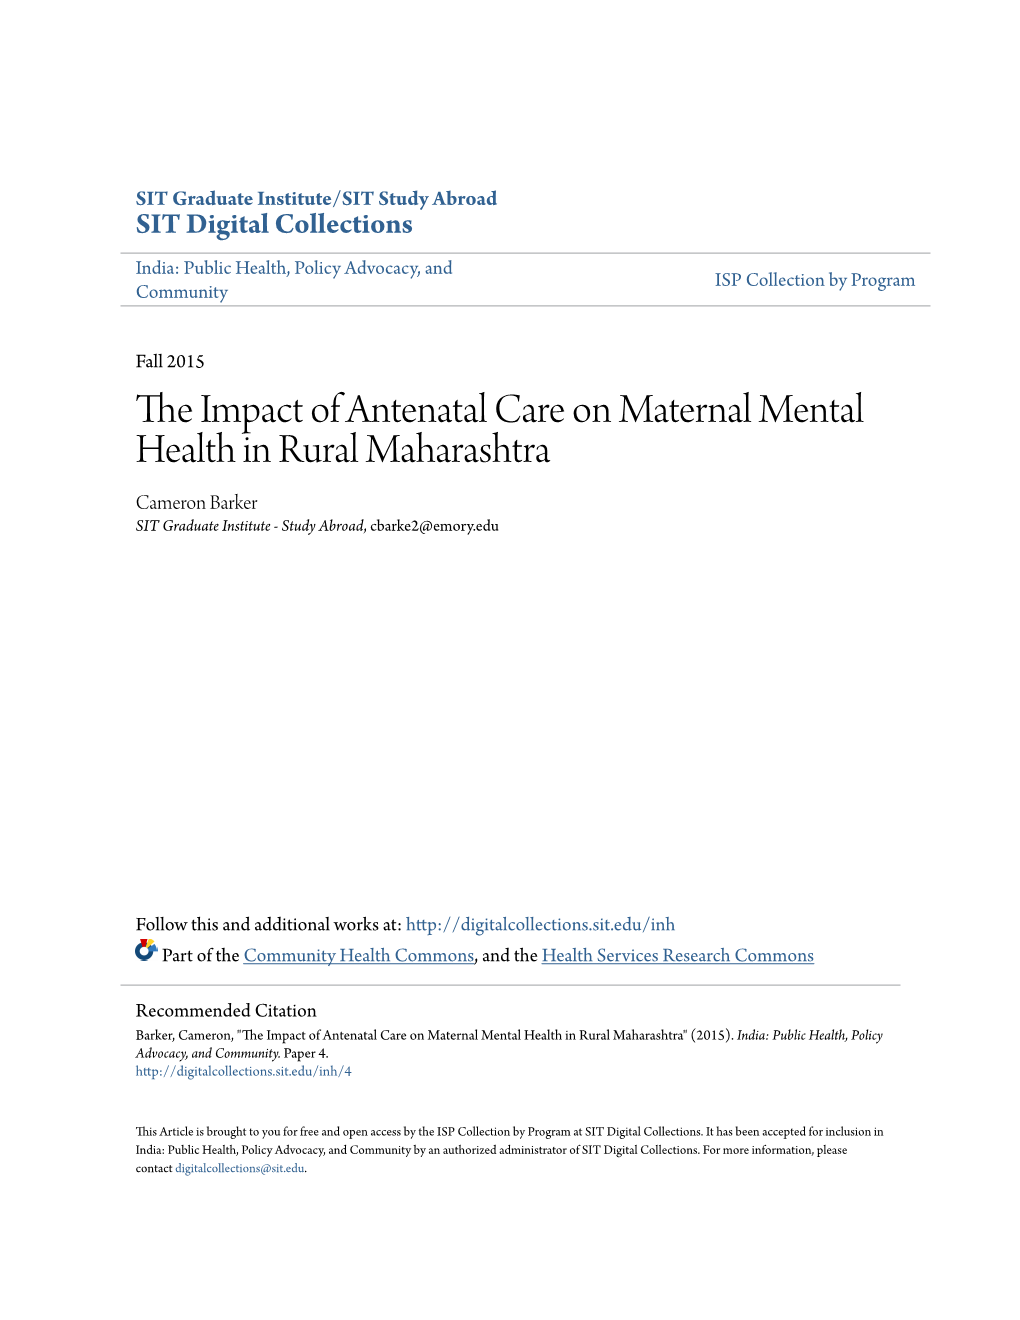 The Impact of Antenatal Care on Maternal Mental Health in Rural Maharashtra